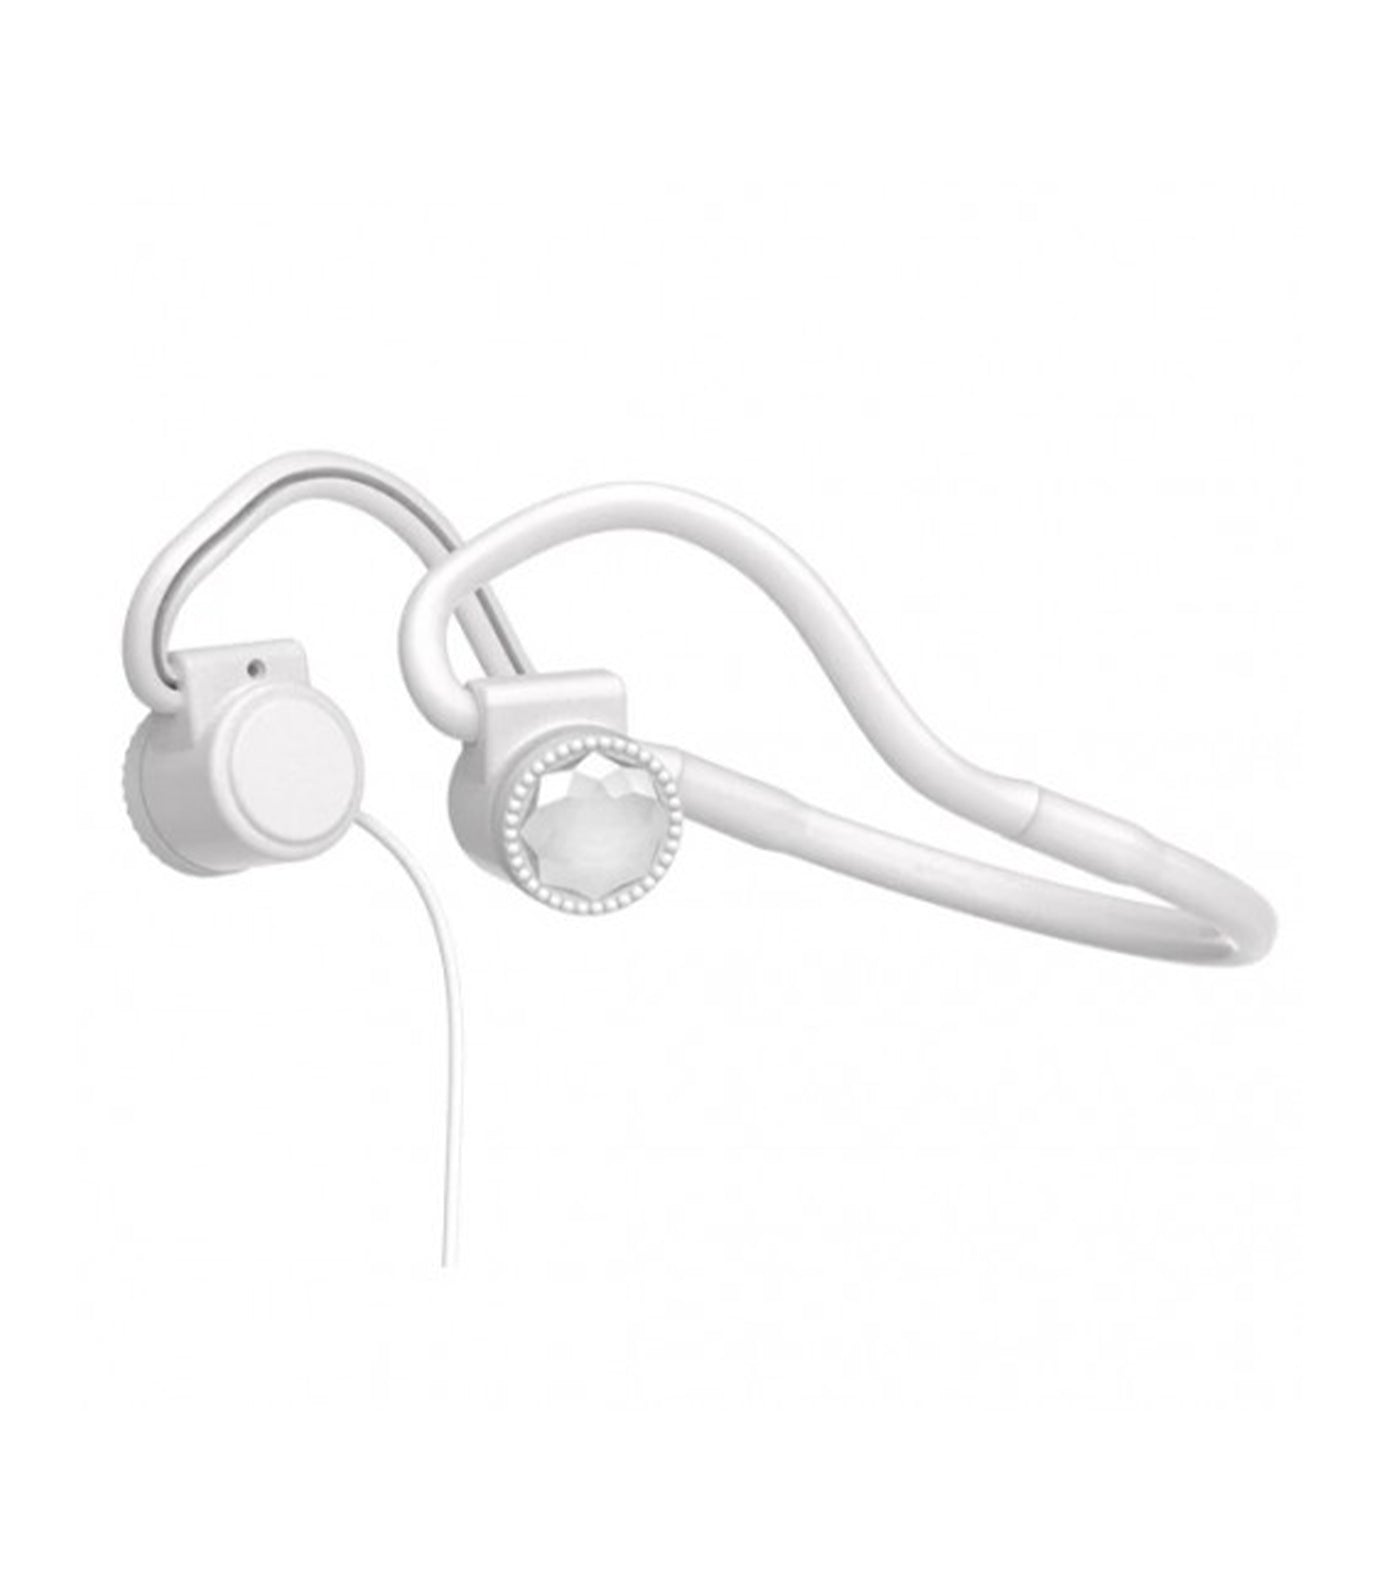 myfirst white bone conduction headphones for kids 